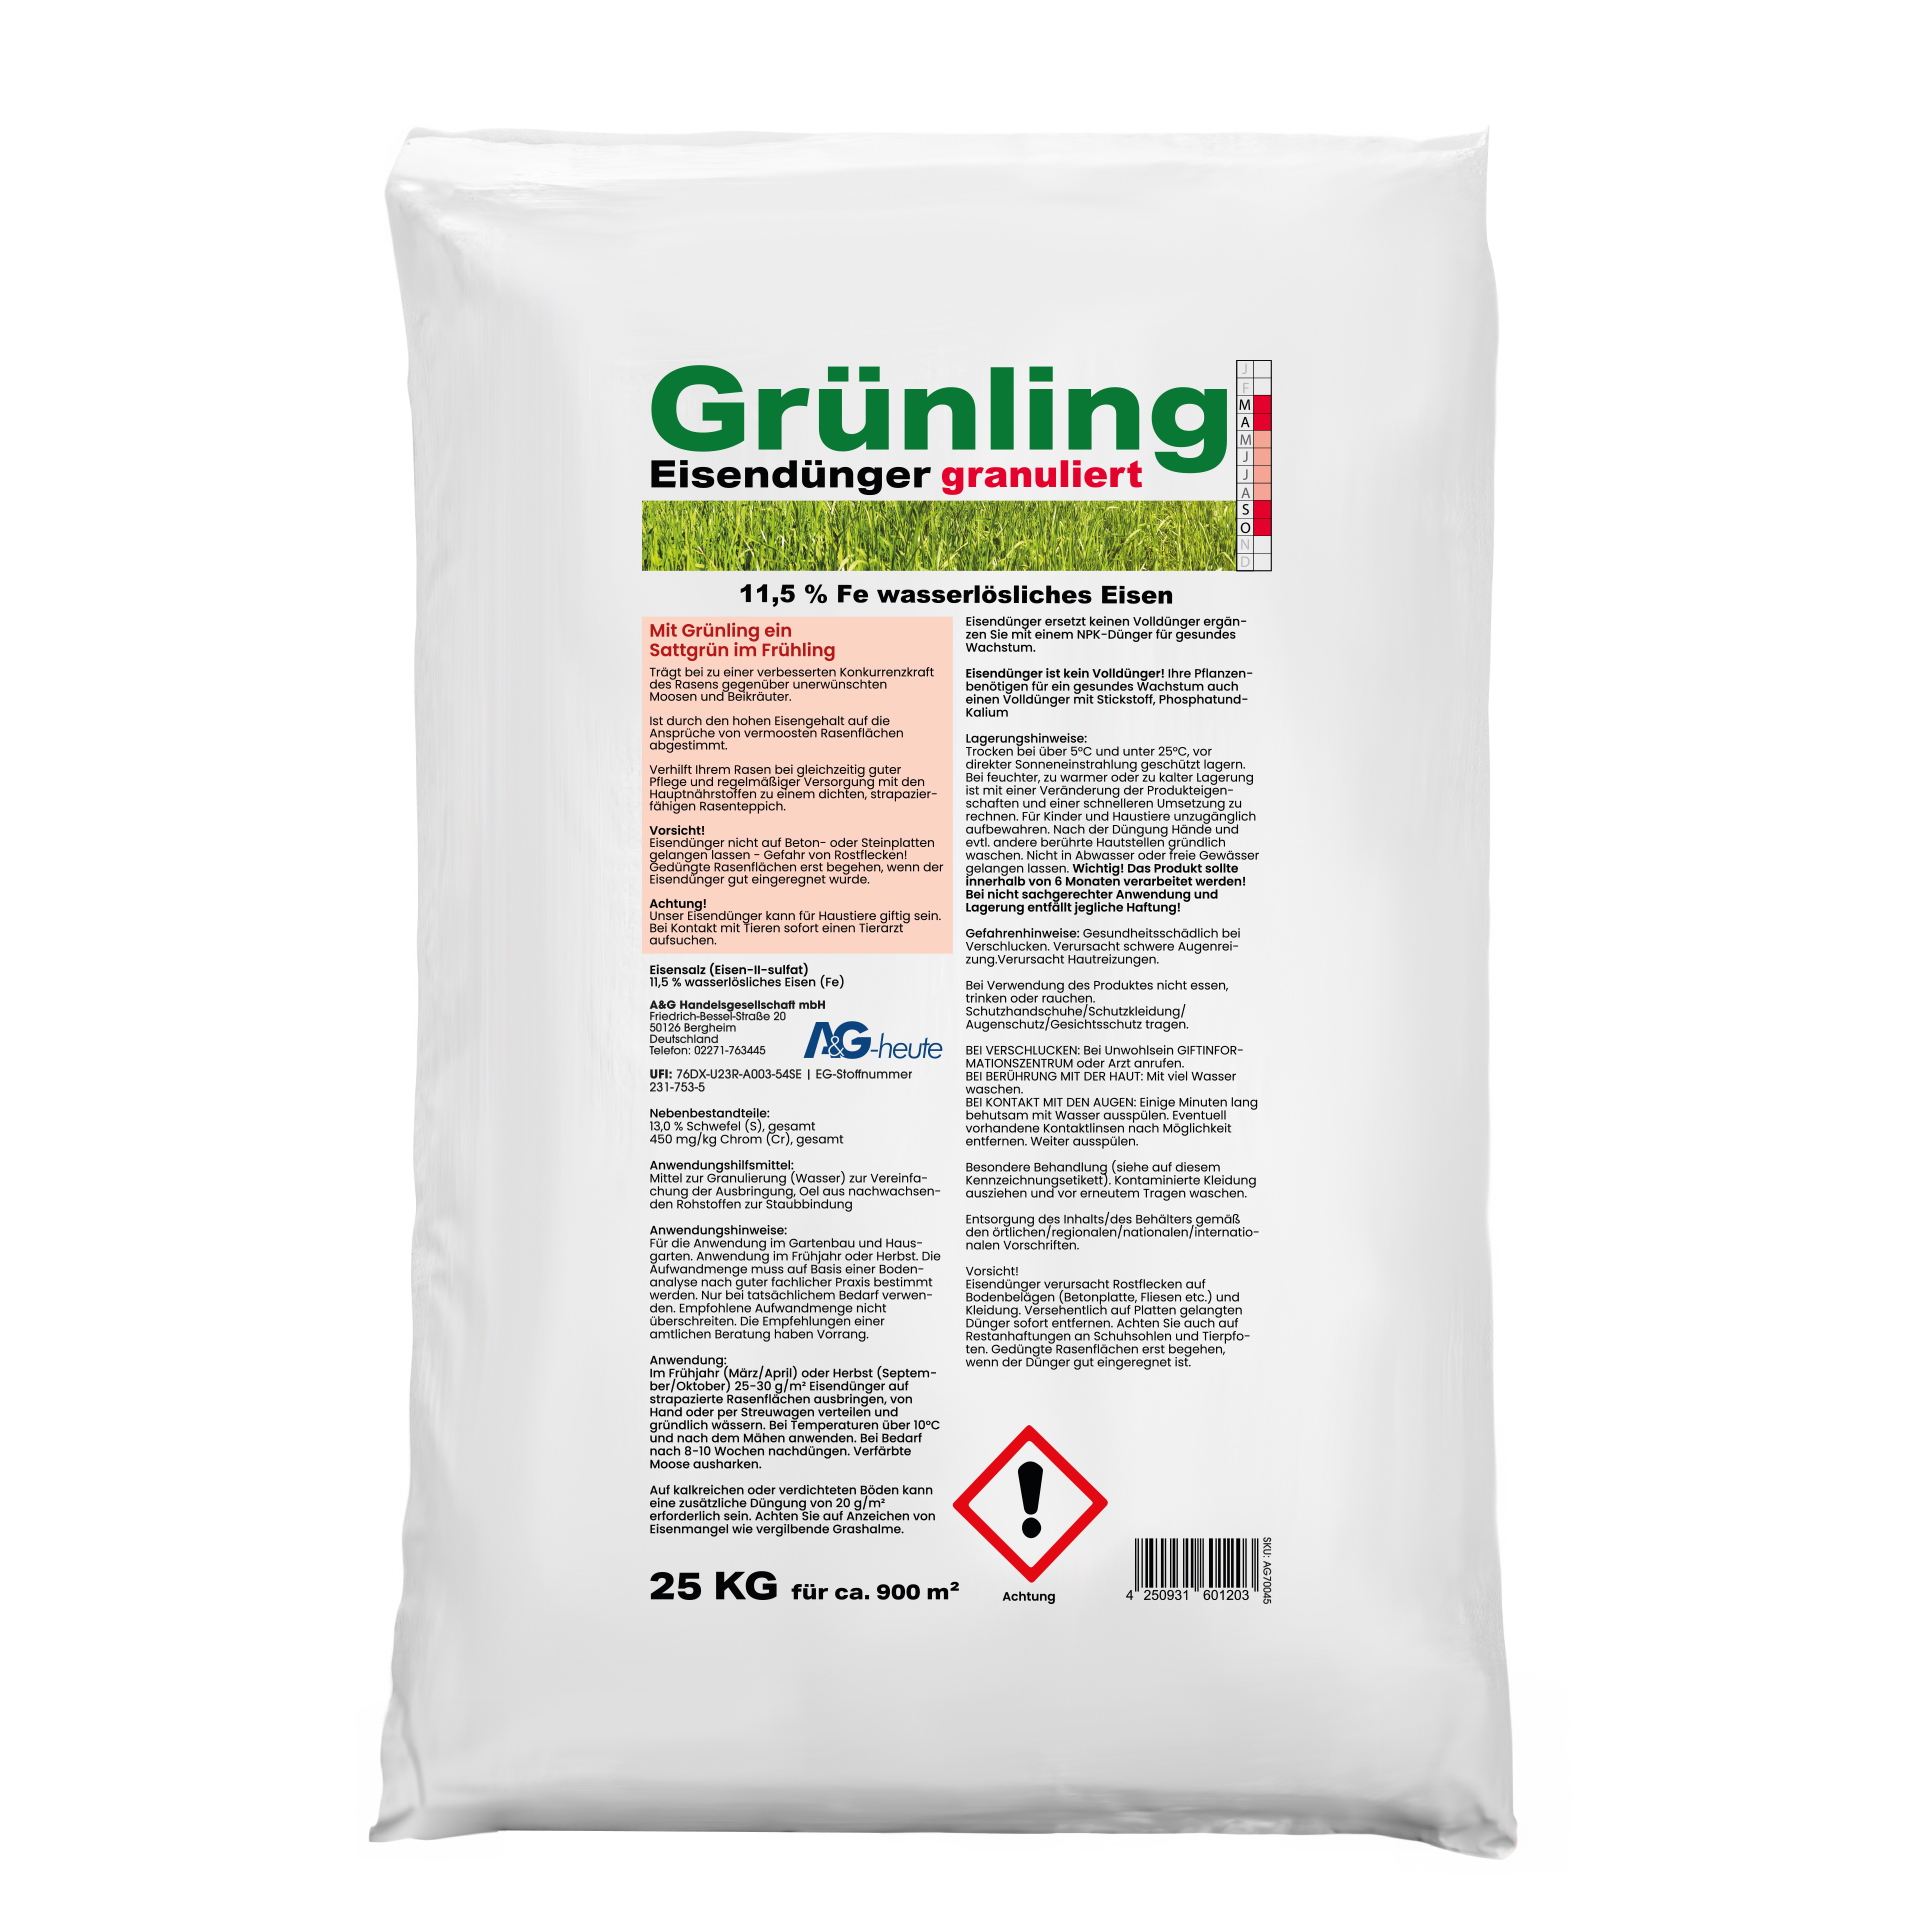 A&G-heute 25 kg Grünling Eisendünger Granulat